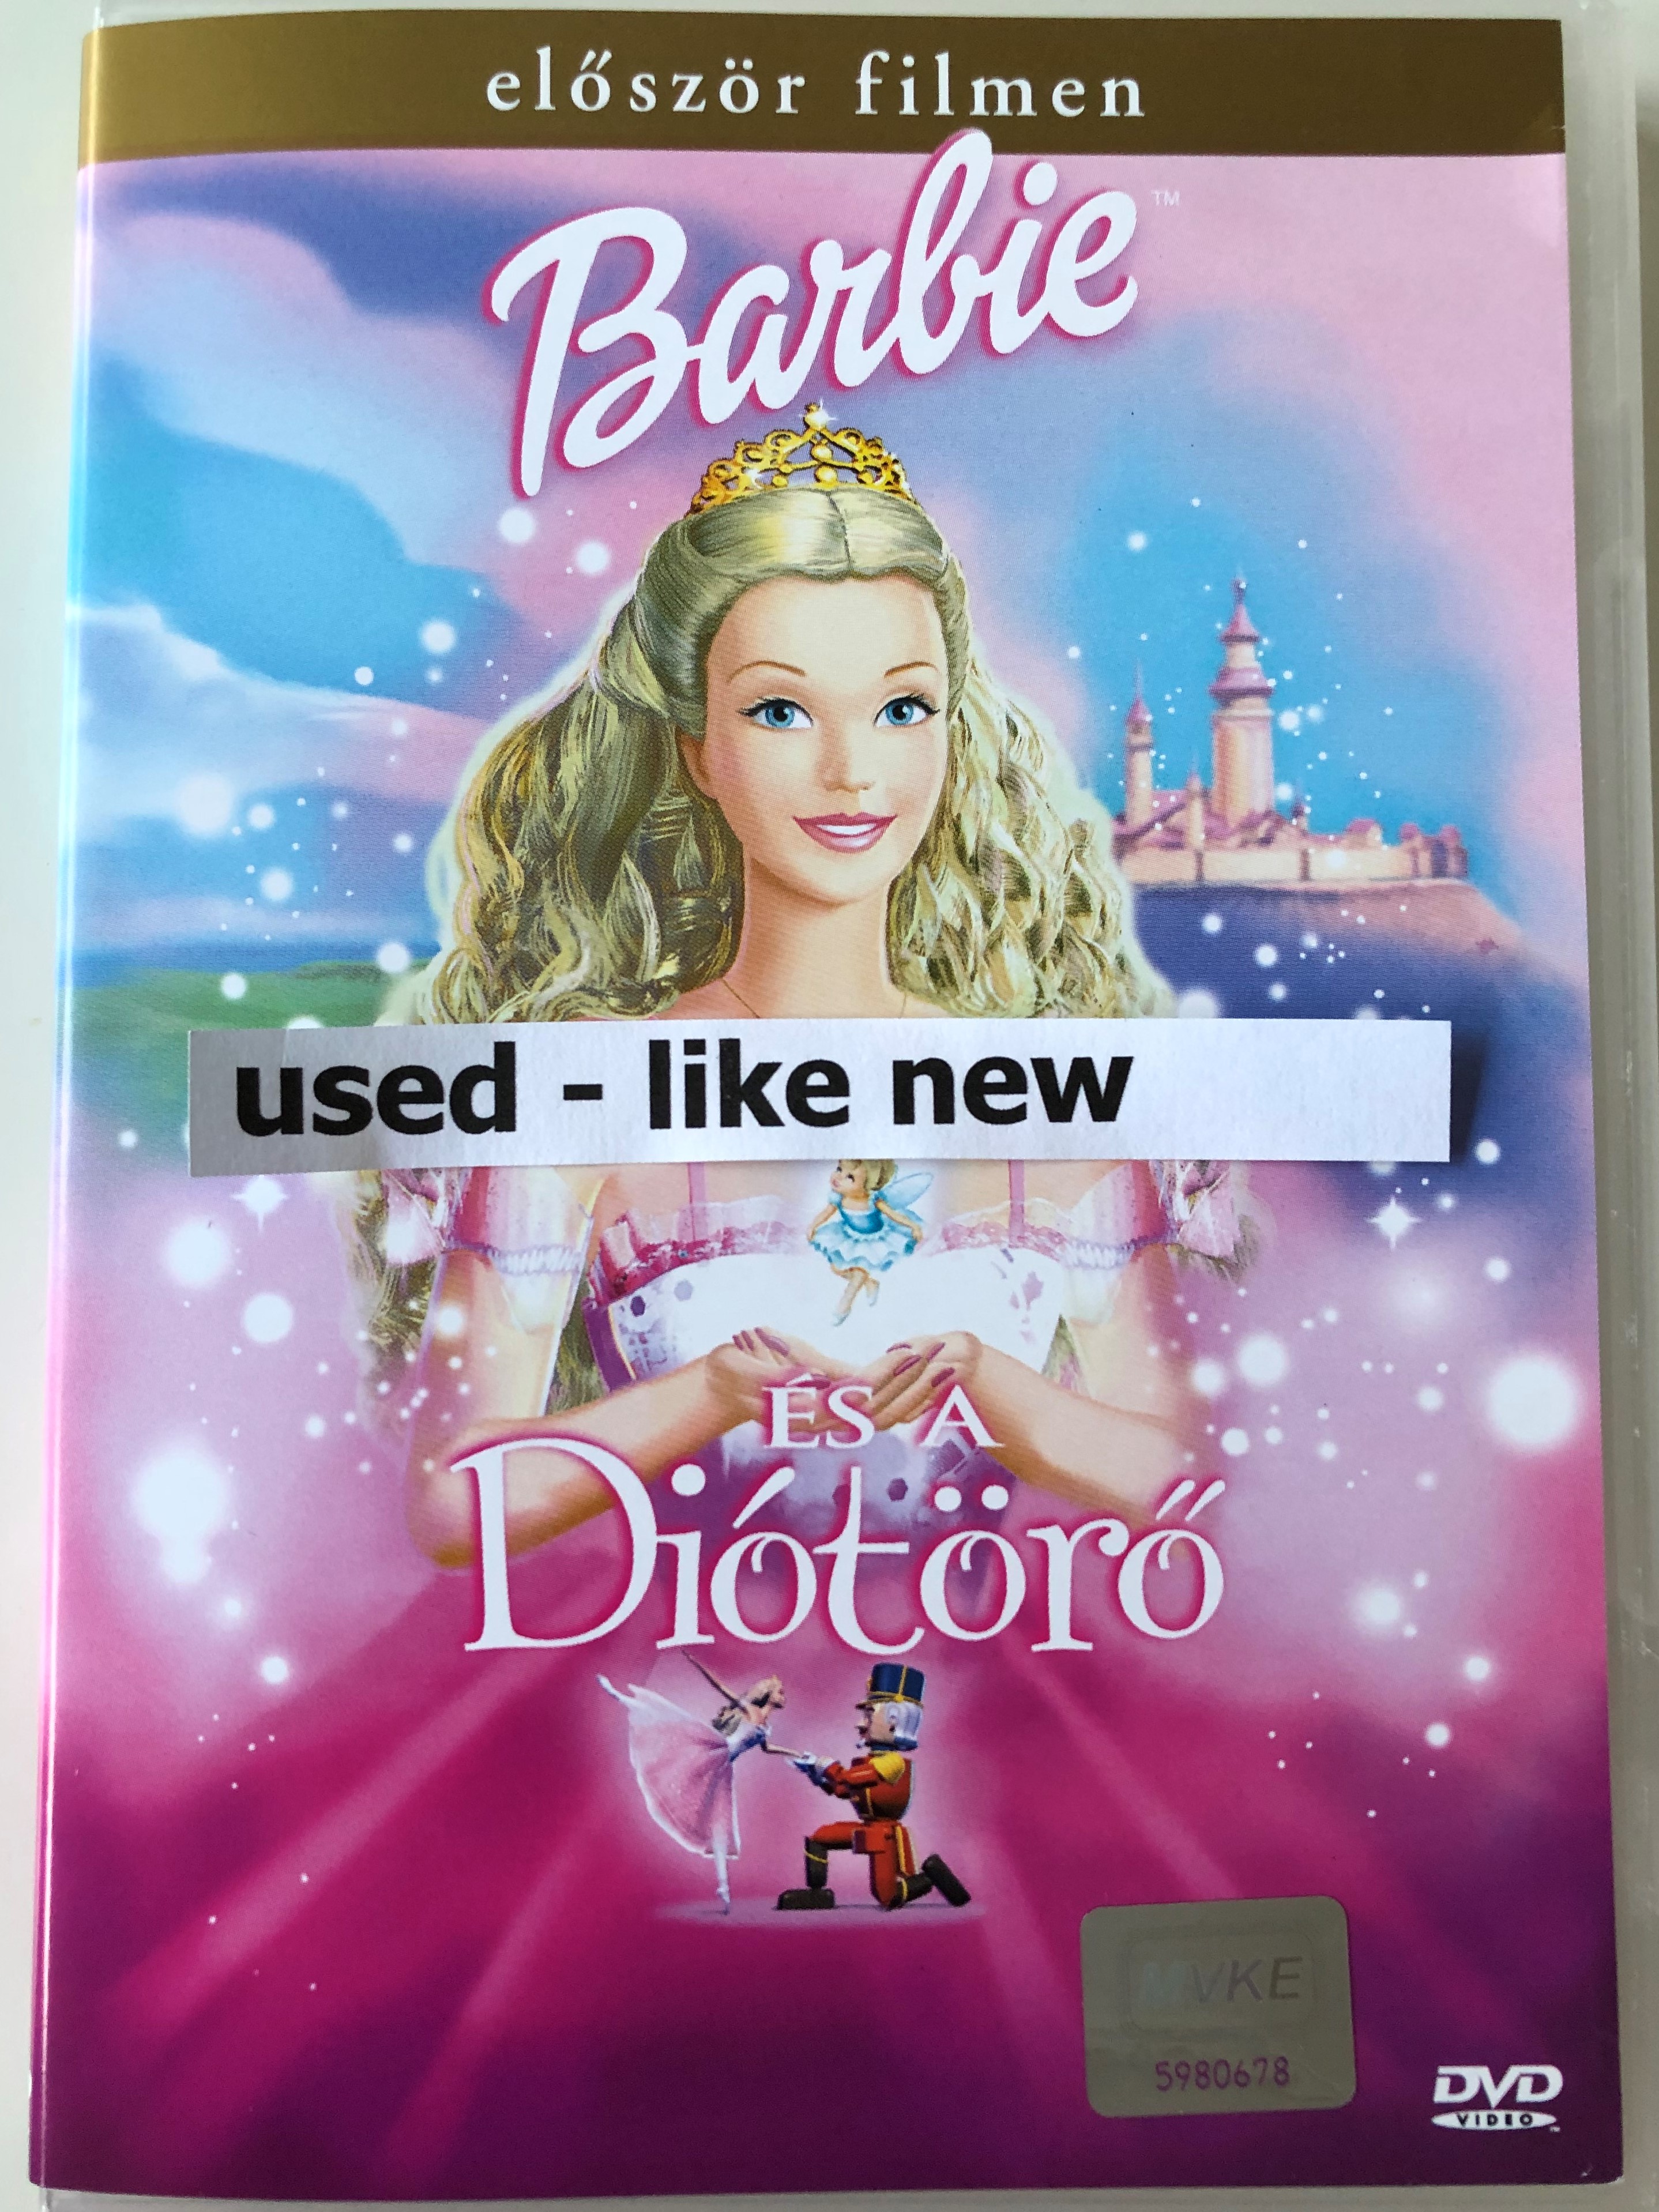 Barbie in the Nutcracker DVD 2001 Barbie és a diótörő / Directed by Owen  Hurley / Starring: Kelly Sheridan, Tim Curry, Kirby Morrow, Chantal Strand  - Bible in My Language